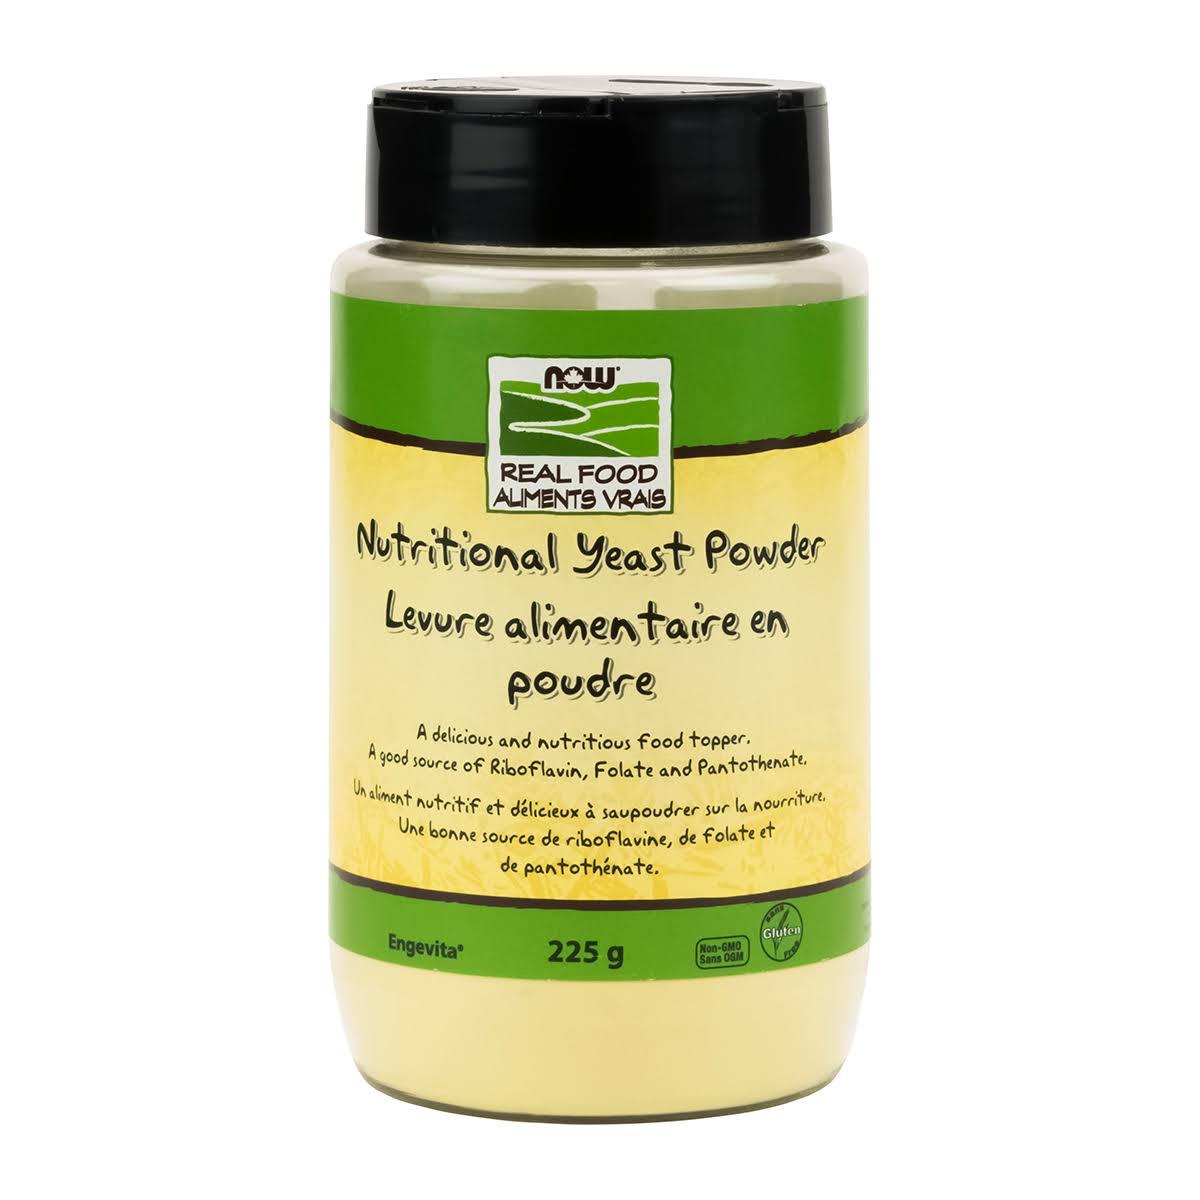 Now Nutritional Yeast Powder 225g